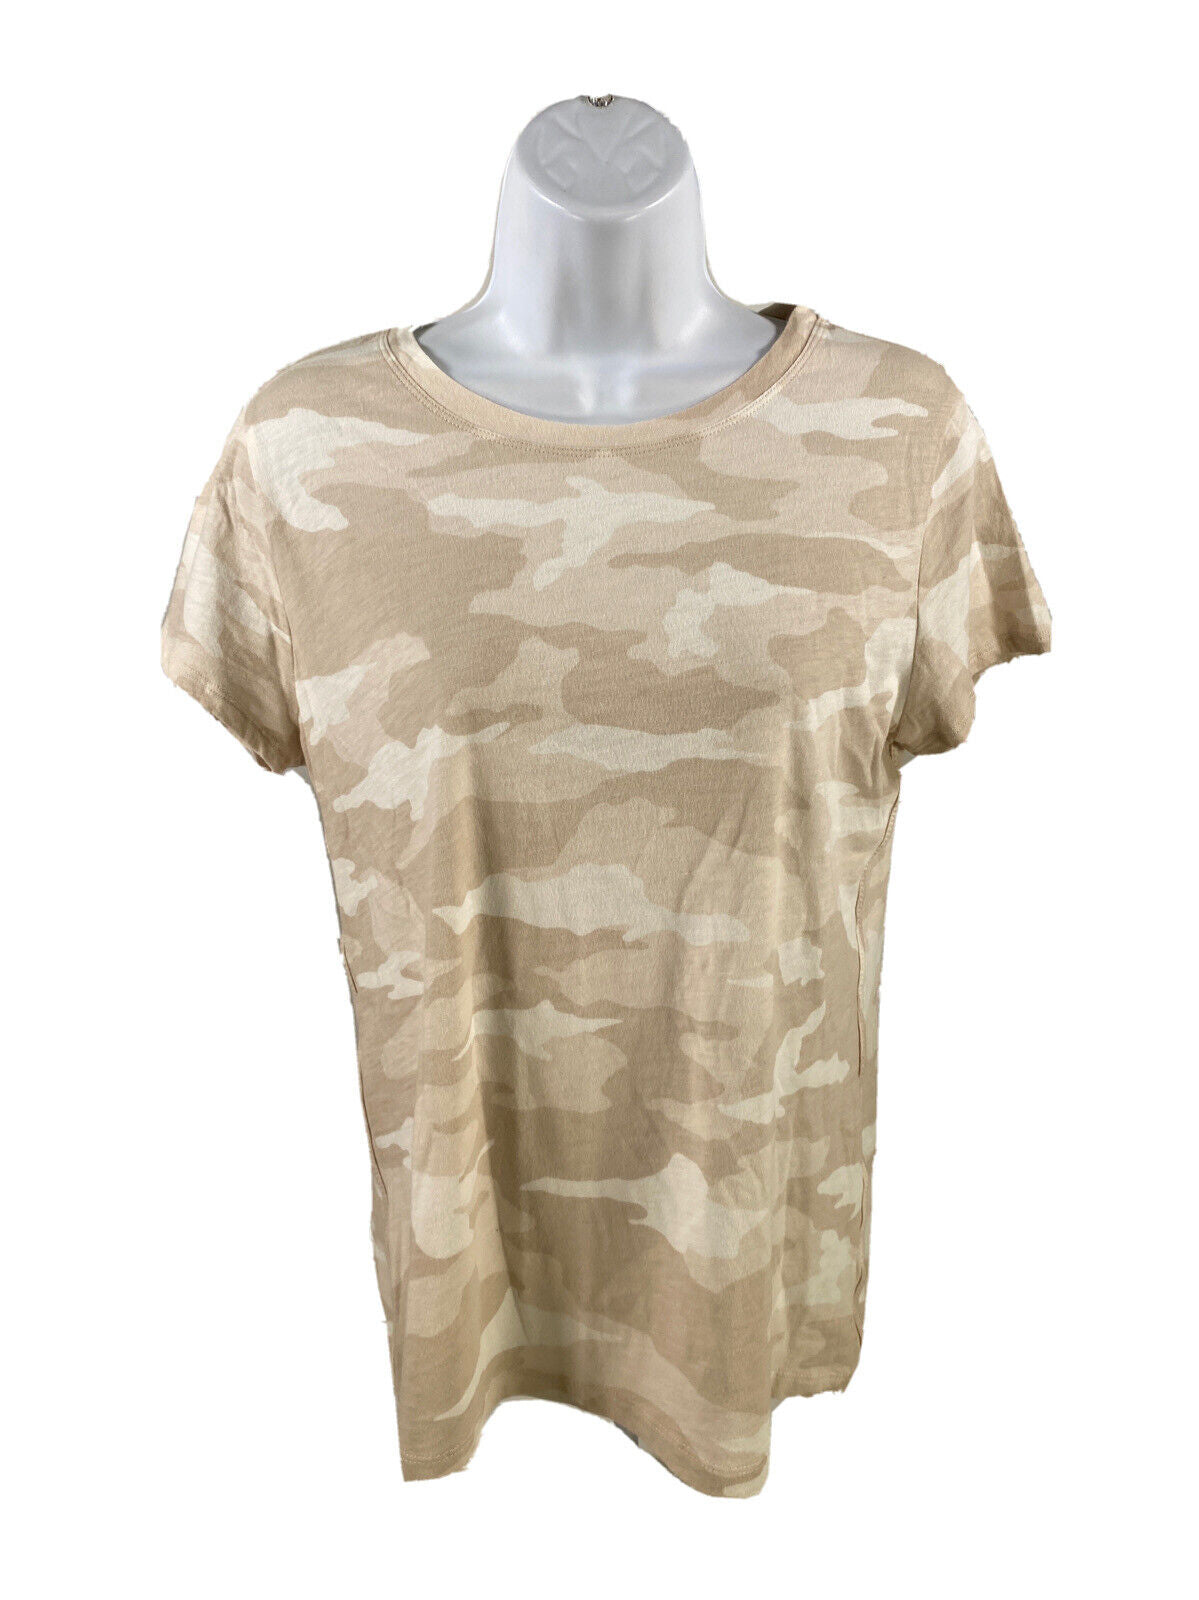 Athleta Women's Beige Camouflage Short Sleeve Daily Crewneck T-Shirt - M